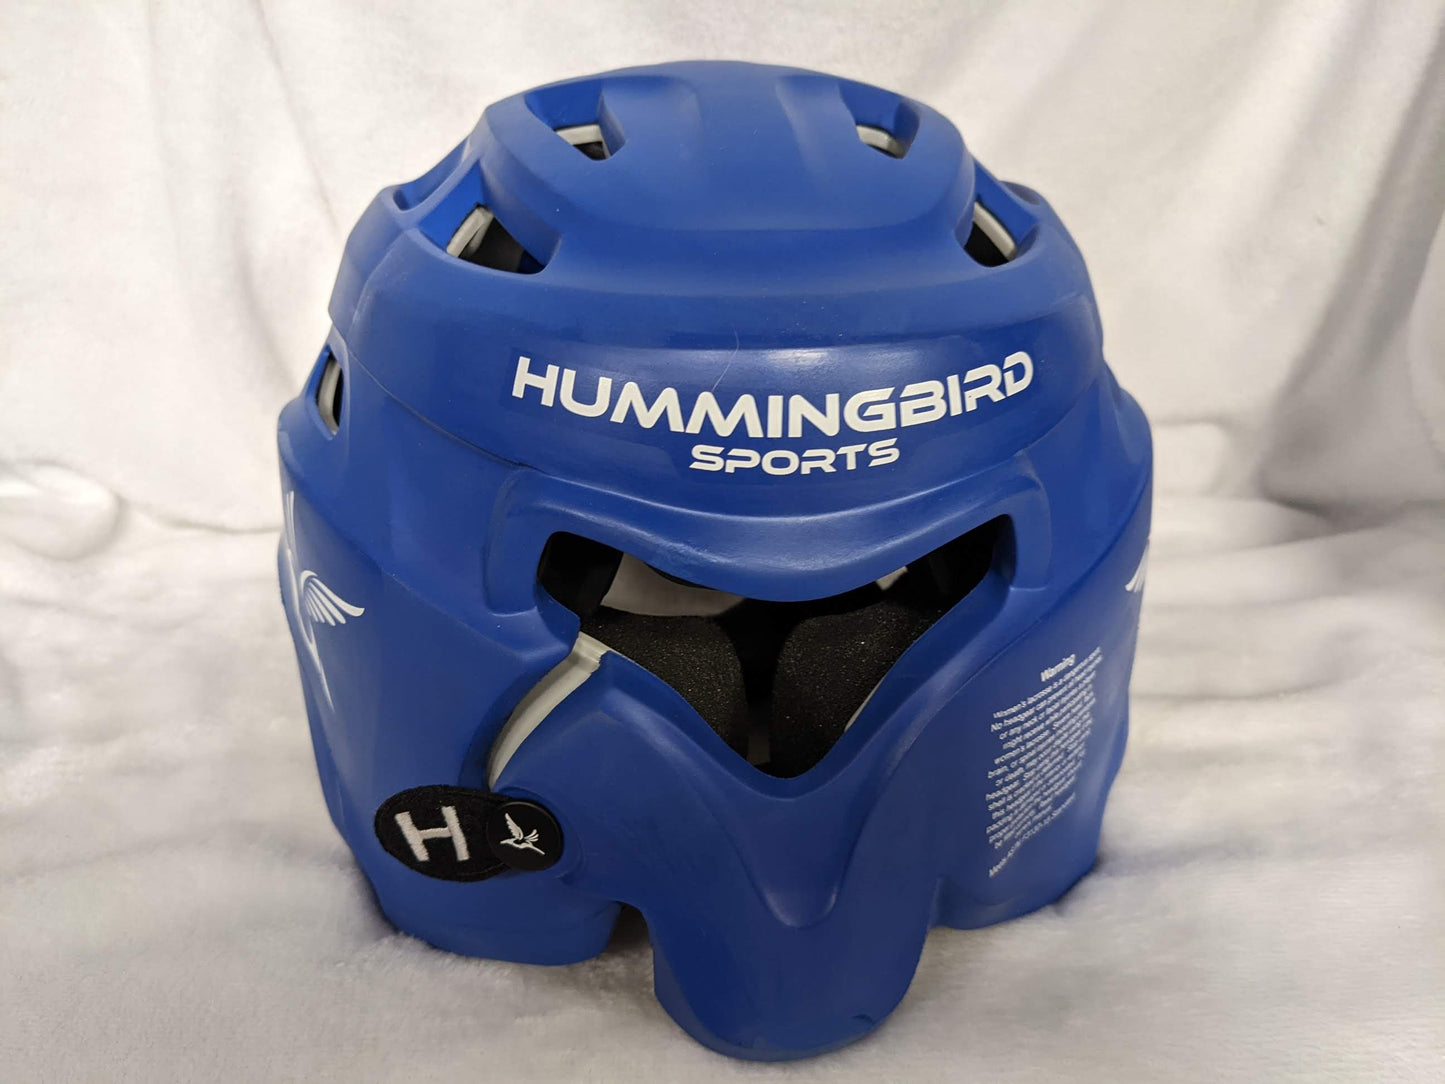 Hummingbird Sports Women's Lacrosse Helmet Size Small/Medium Color Blue Condition Used